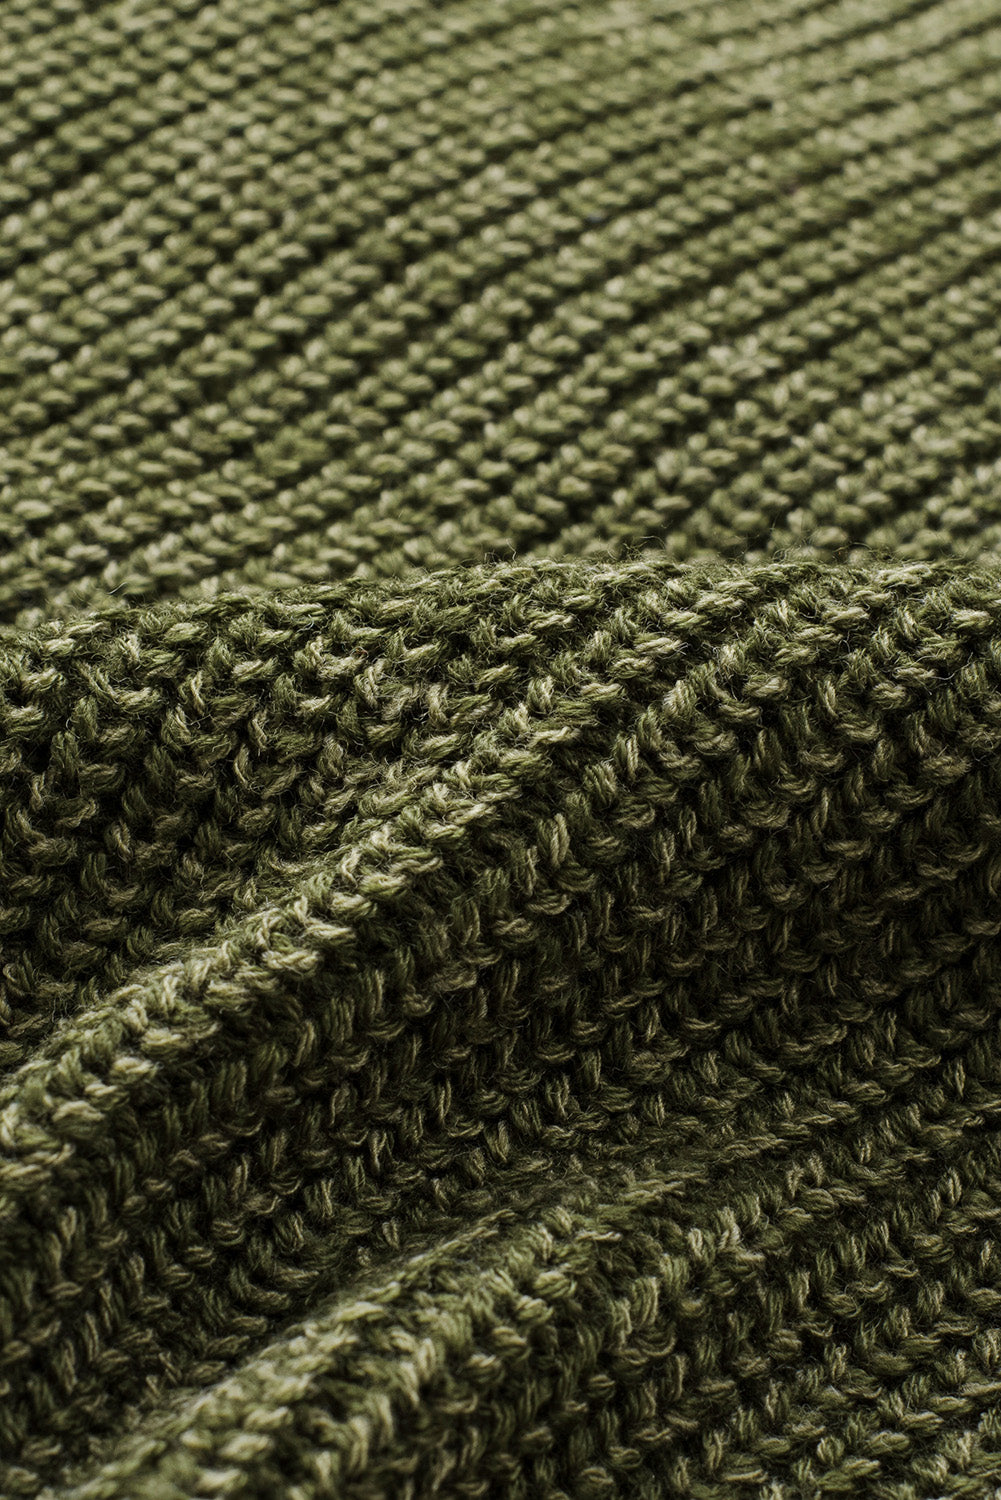 Green Zipped Turtleneck Drop Shoulder Knit Sweater